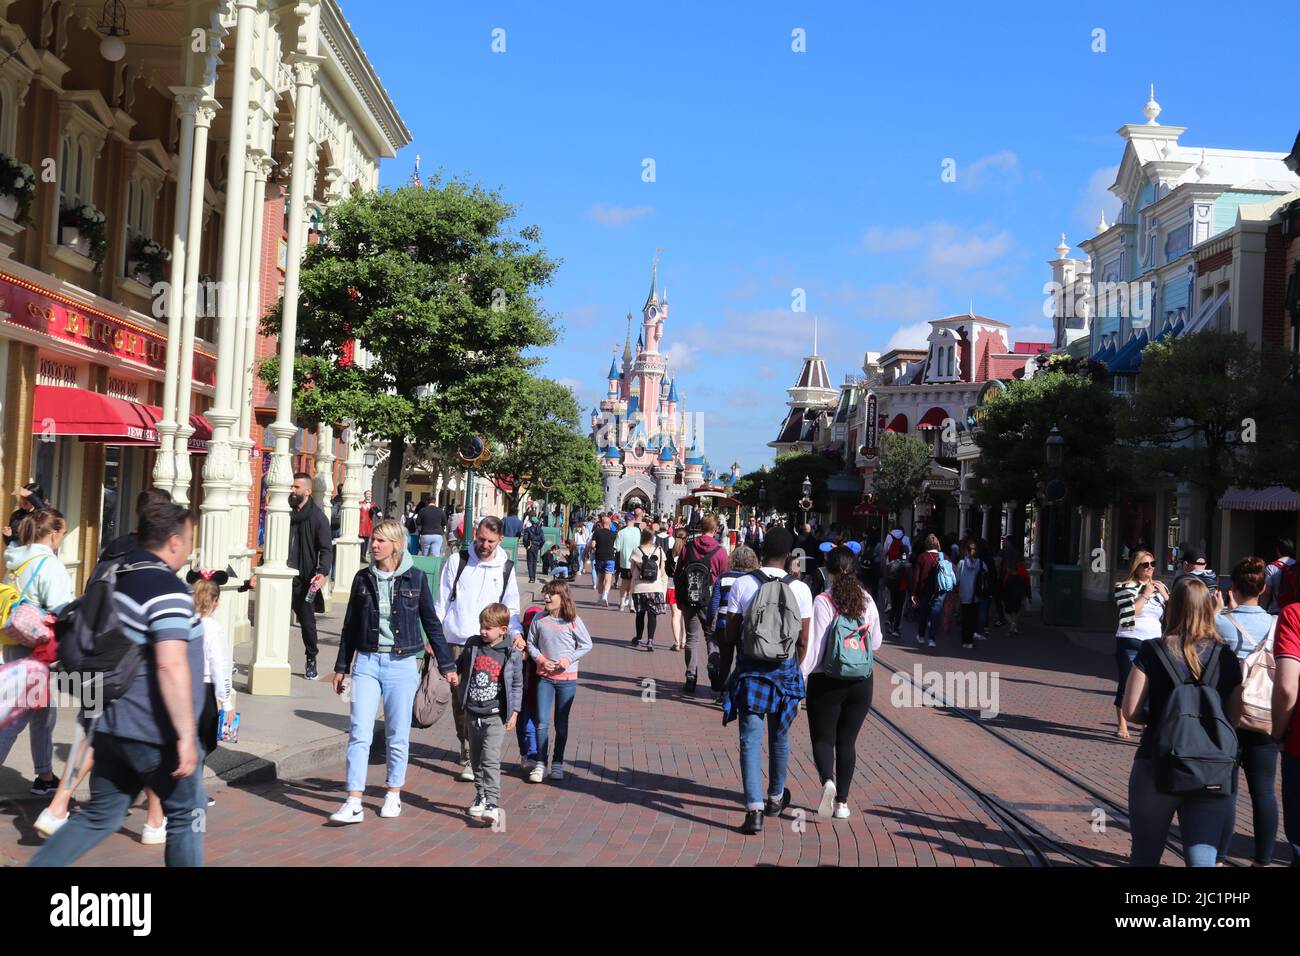 The 30 anniversary of Disneyland Paris France Stock Photo